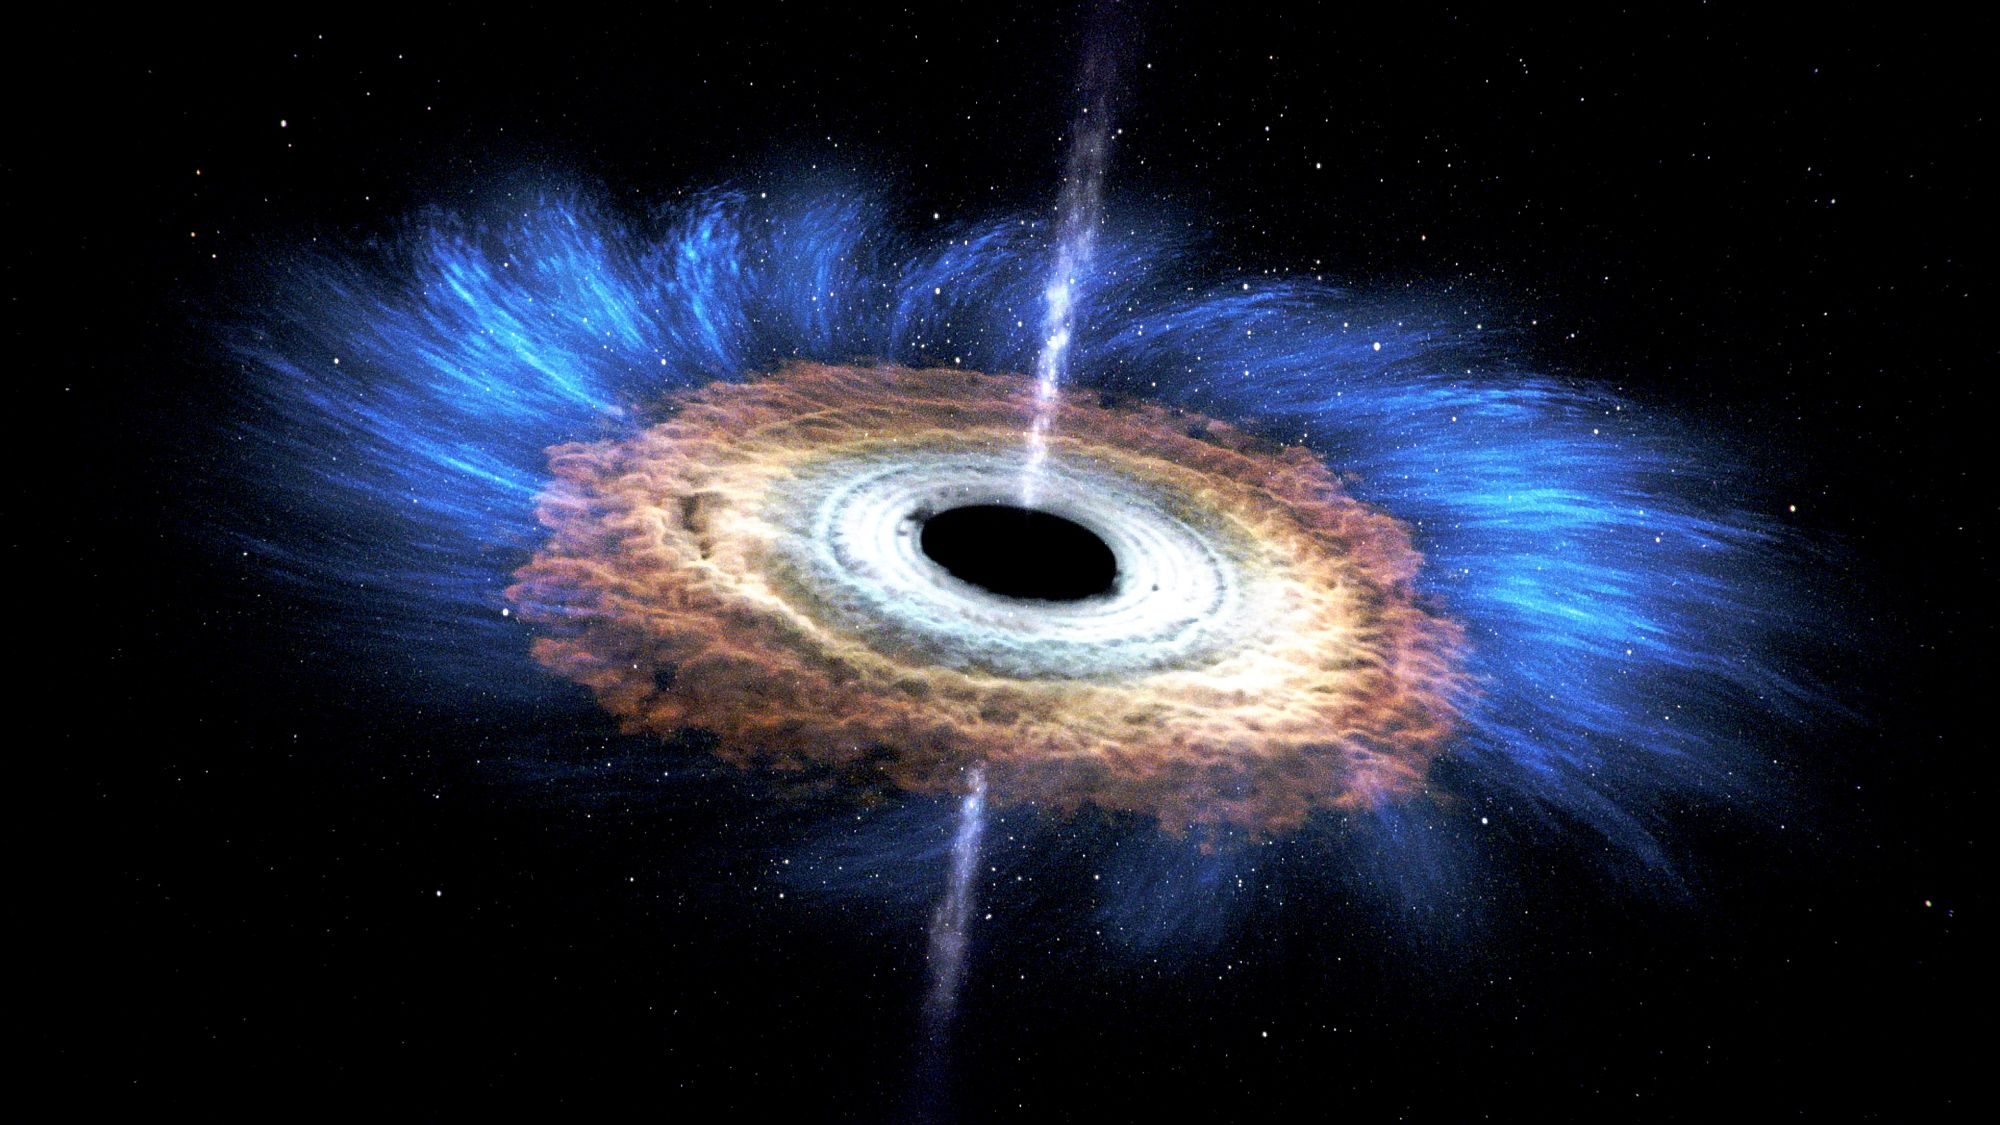 Illustration of black hole tearing apart star - NASA